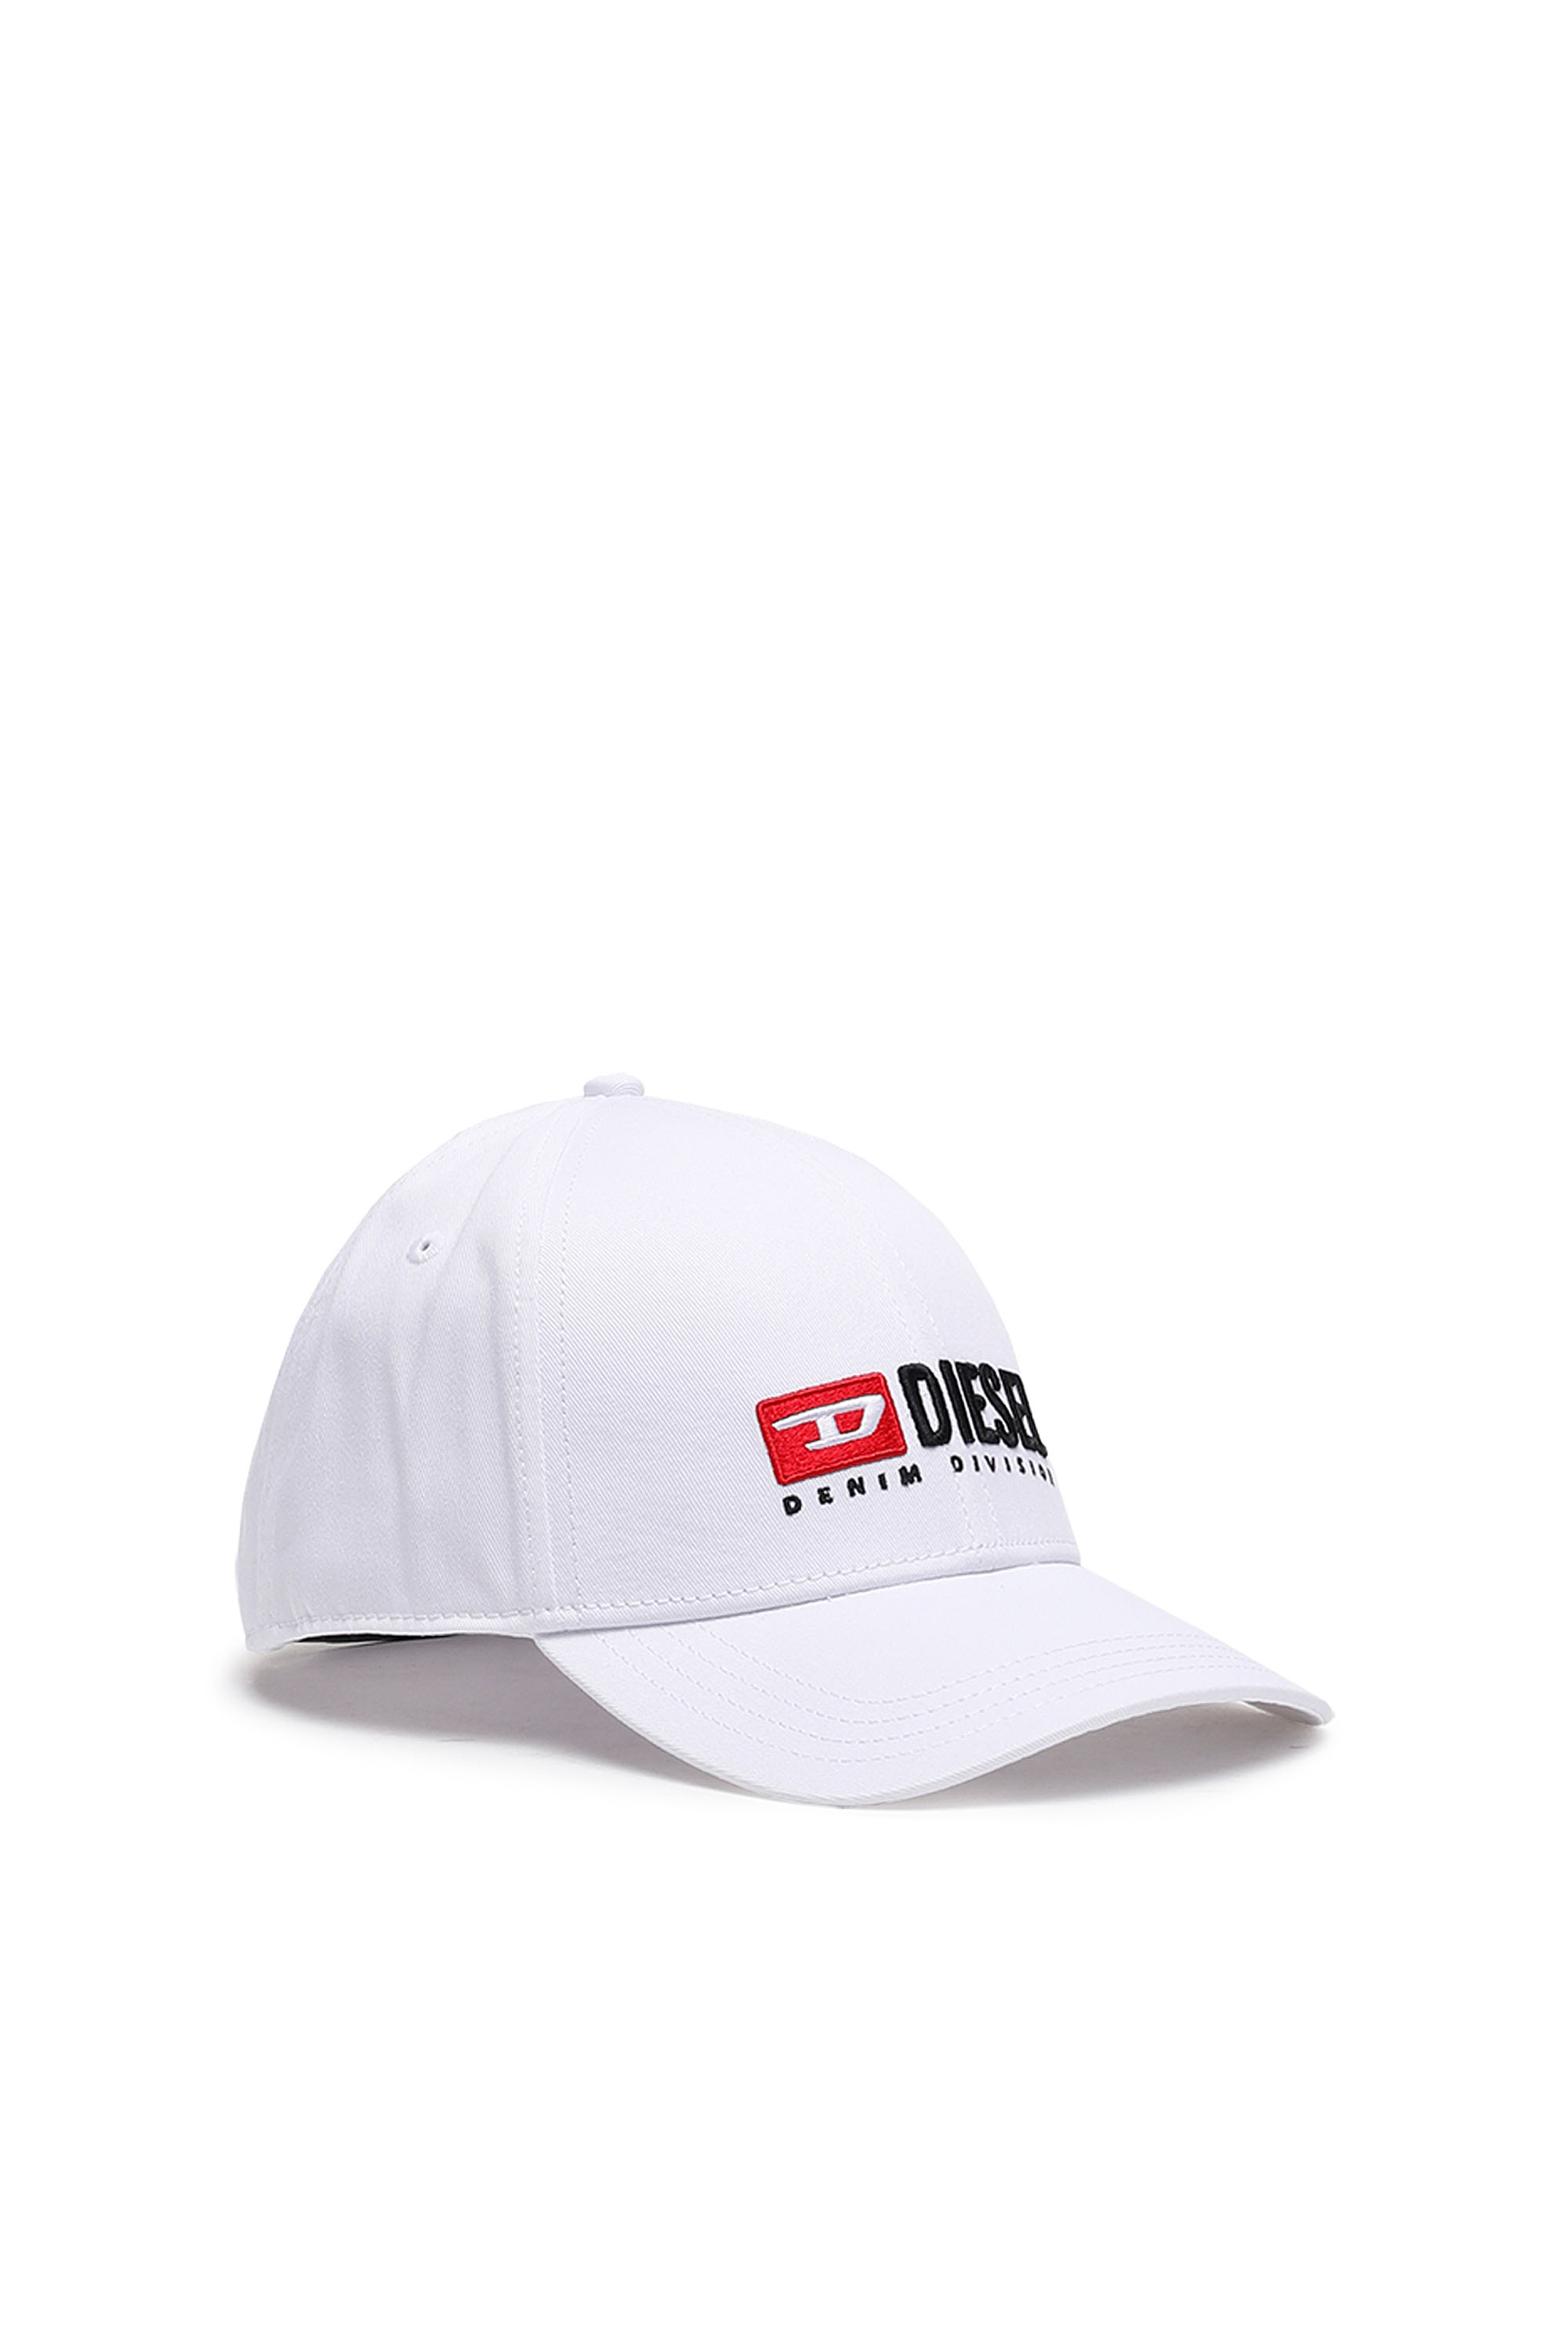 Diesel - Baseball cap with Denim Division logo - Caps - Unisex - White